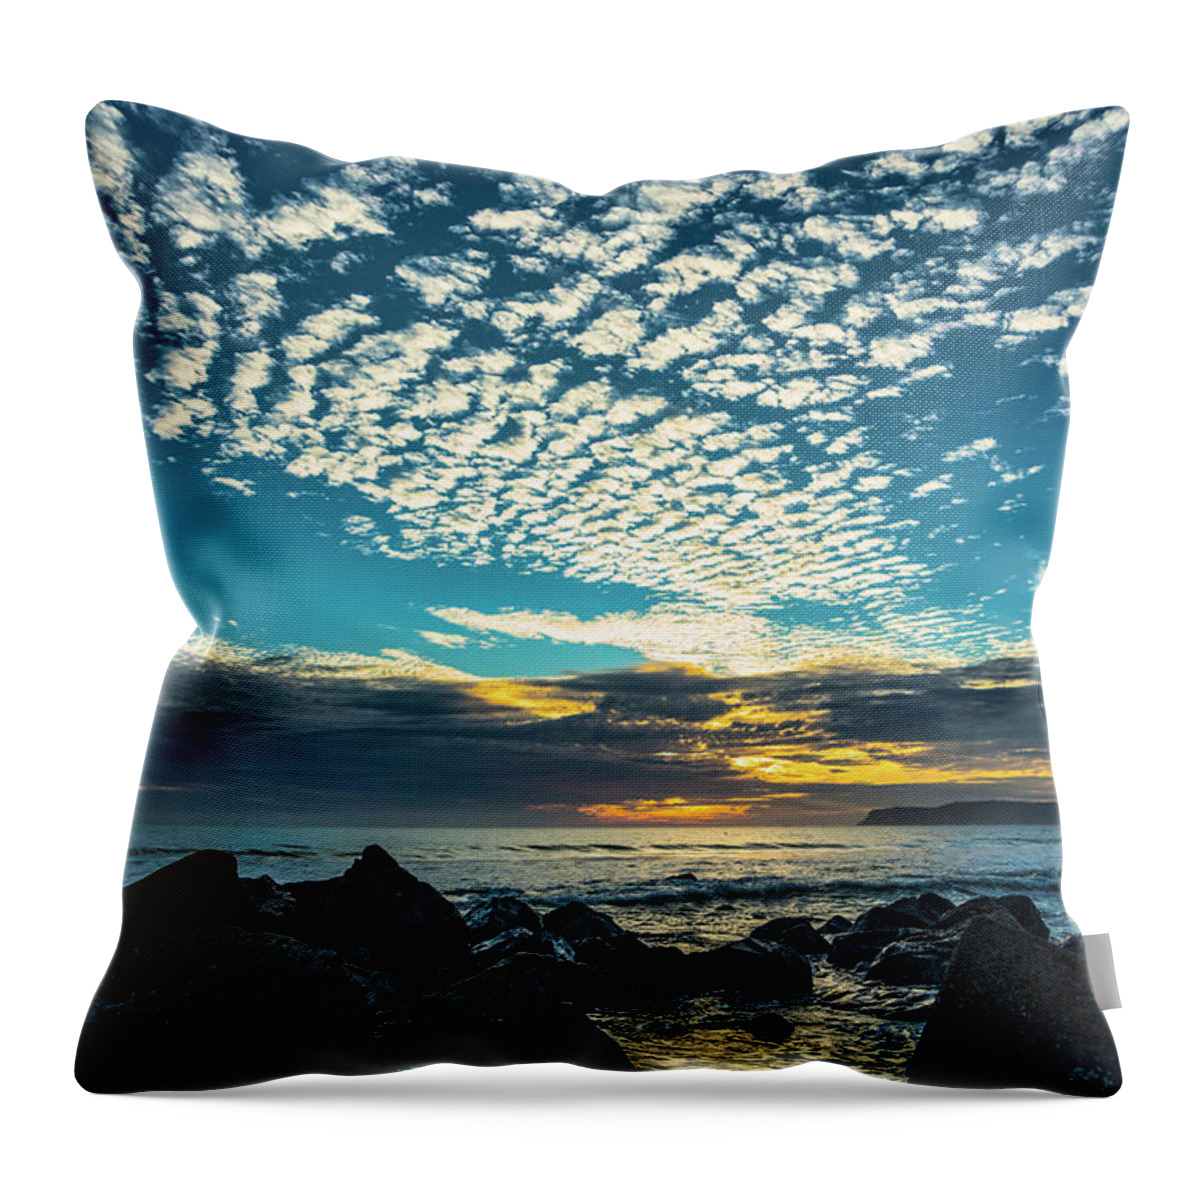 Coronado Throw Pillow featuring the photograph Mackerel Sky by Dan McGeorge